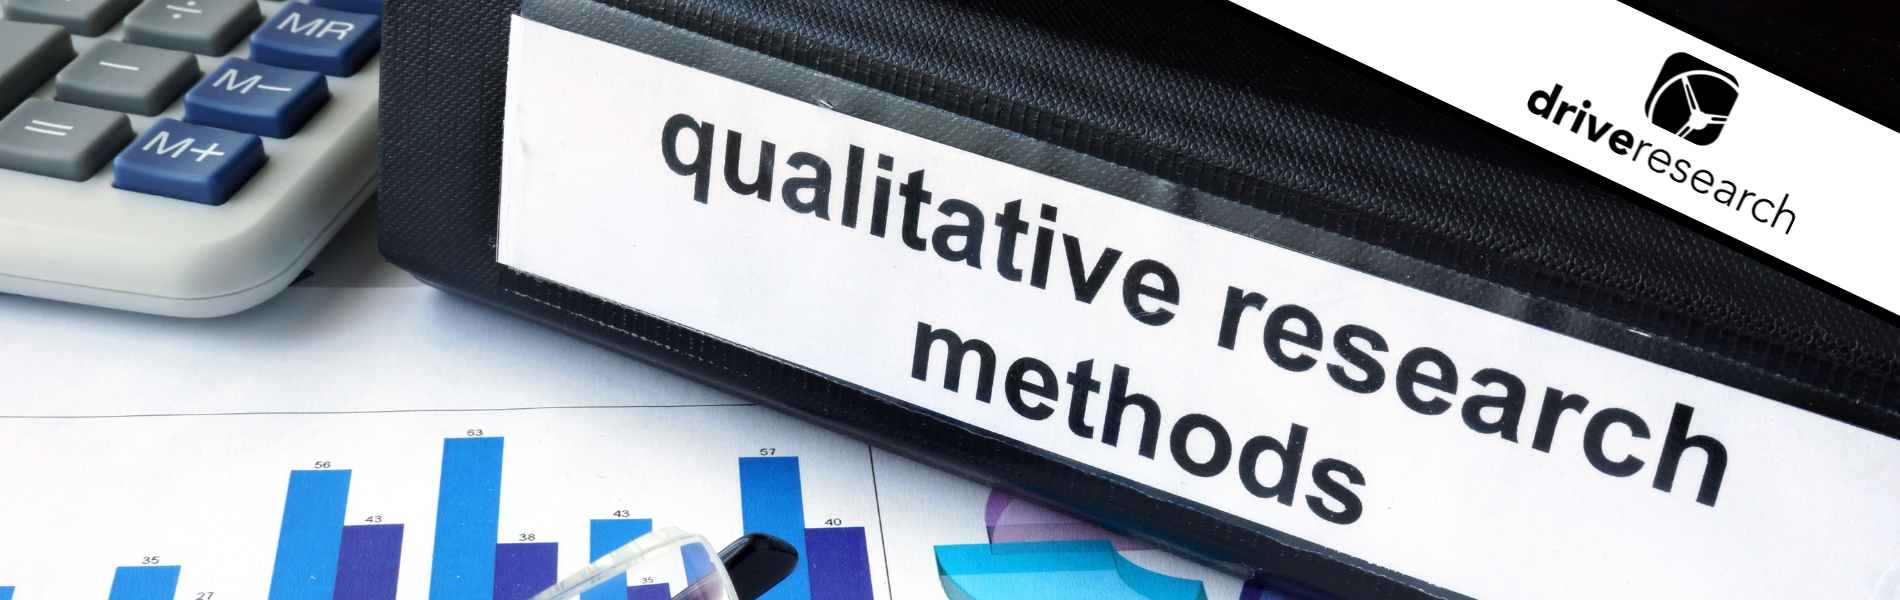 binder that says qualitative research methods